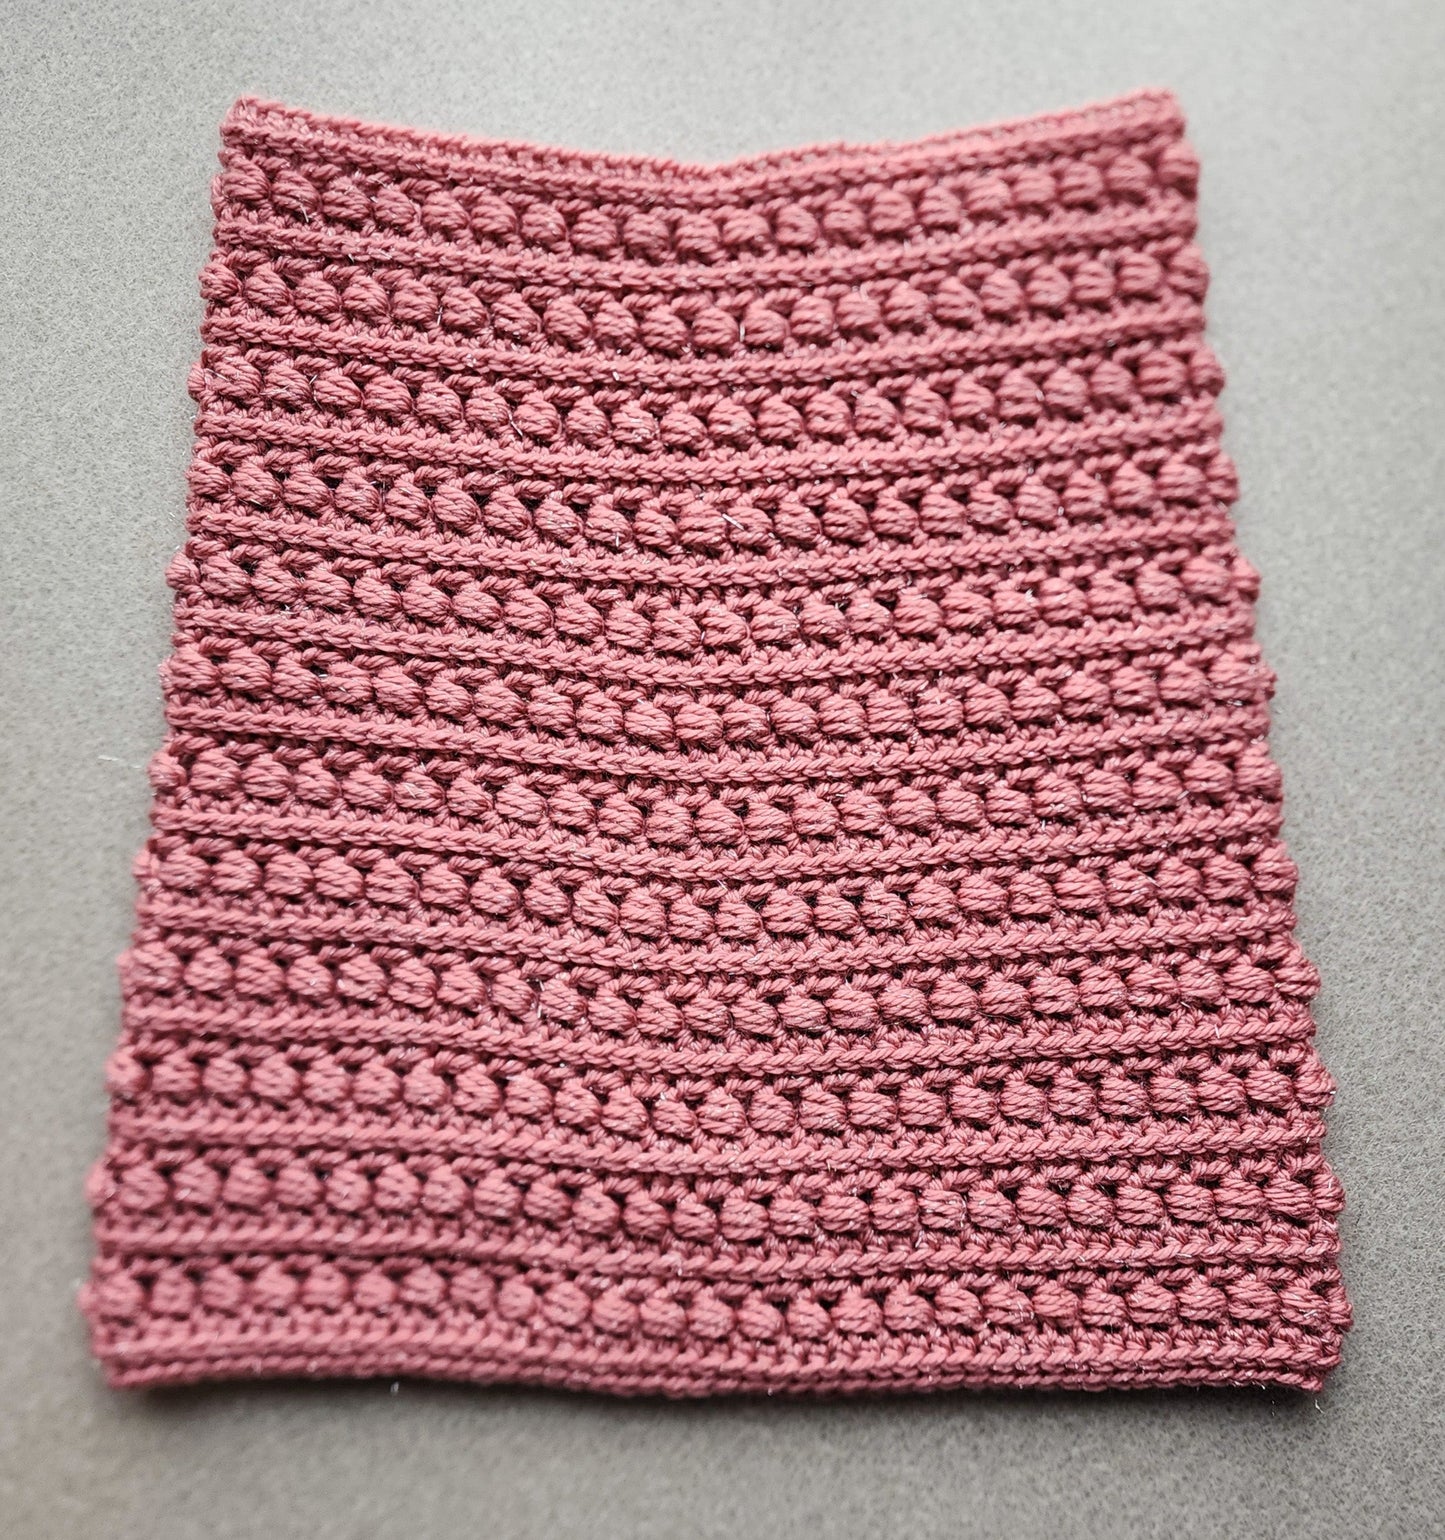 Crochet Pattern: The Carnation Cowl